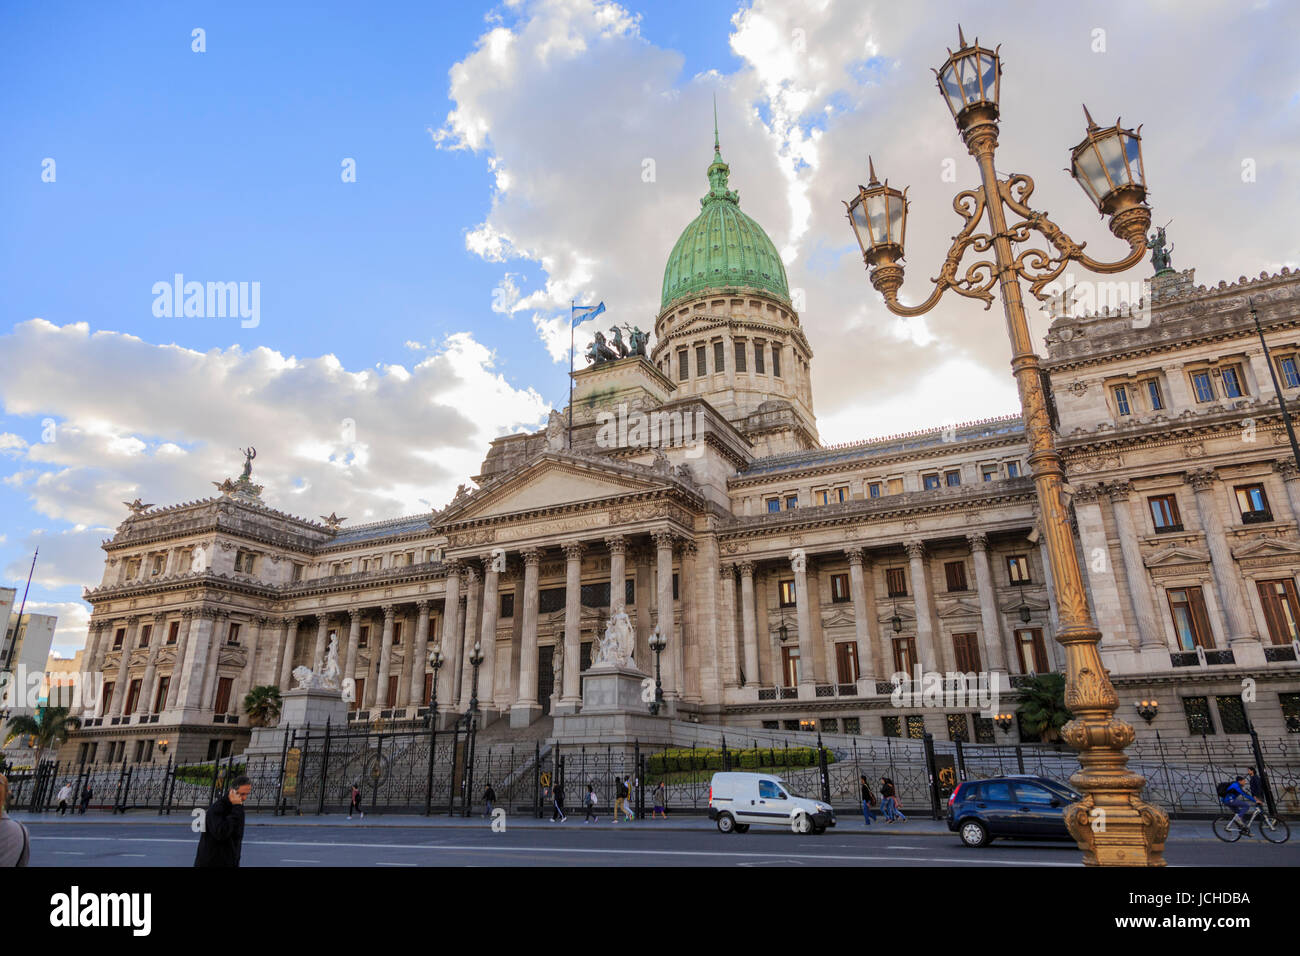 Der, Argentinische Kongresspalast, (,Palacio del Congreso de la Nación Argentina,) in Buenos Aires ist der Sitz des argentinischen Nationalkong Foto Stock